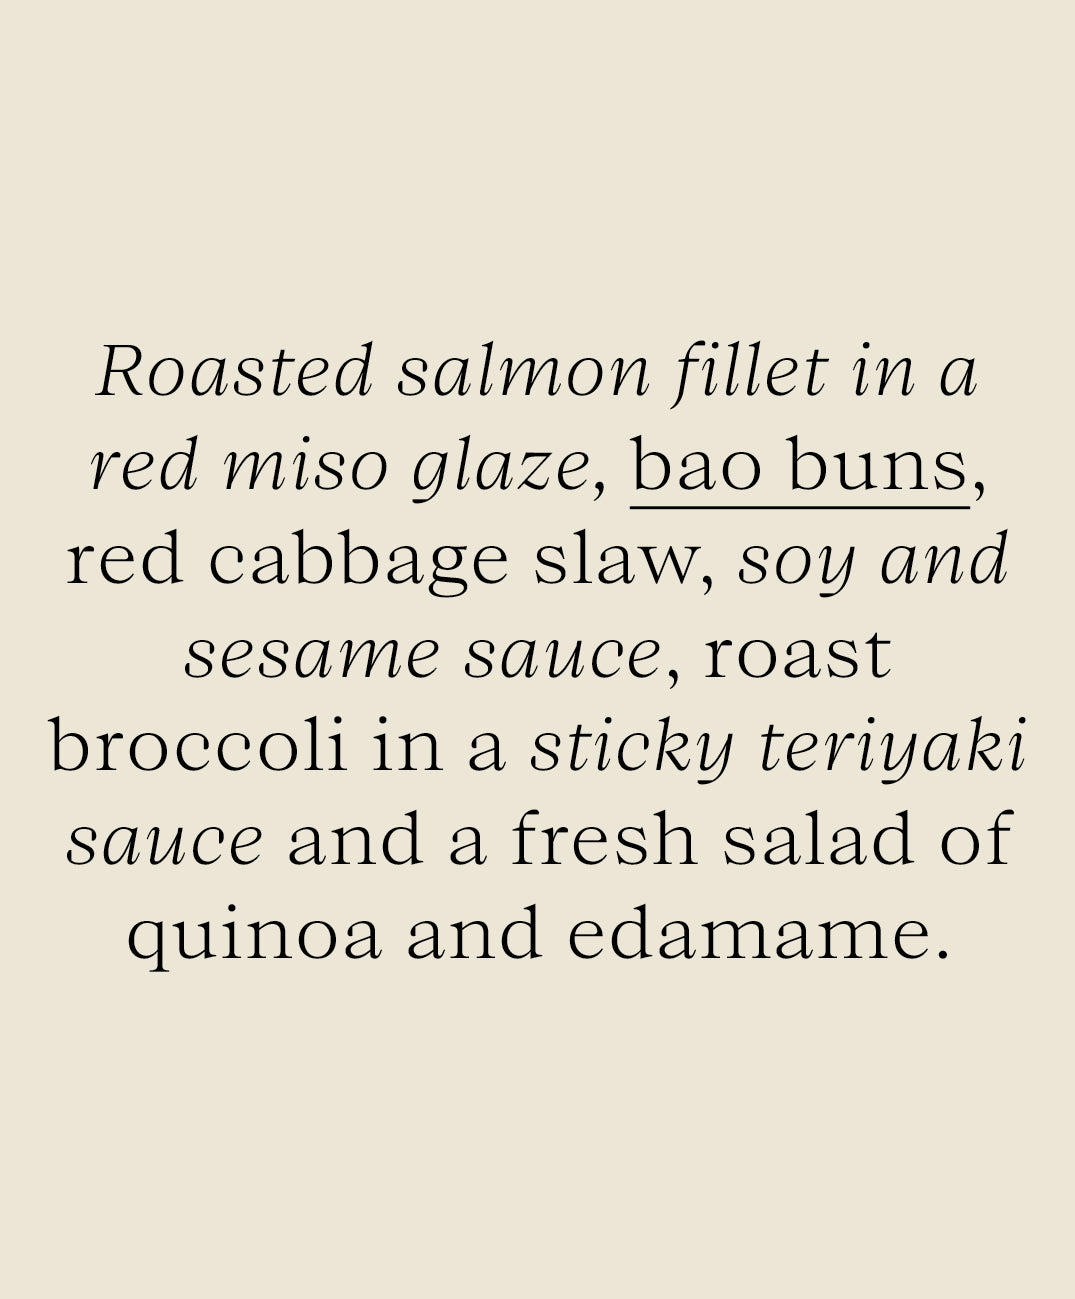 Miso Salmon & Bao Buns Party served with Sticky Teriyaki Roast Broccoli